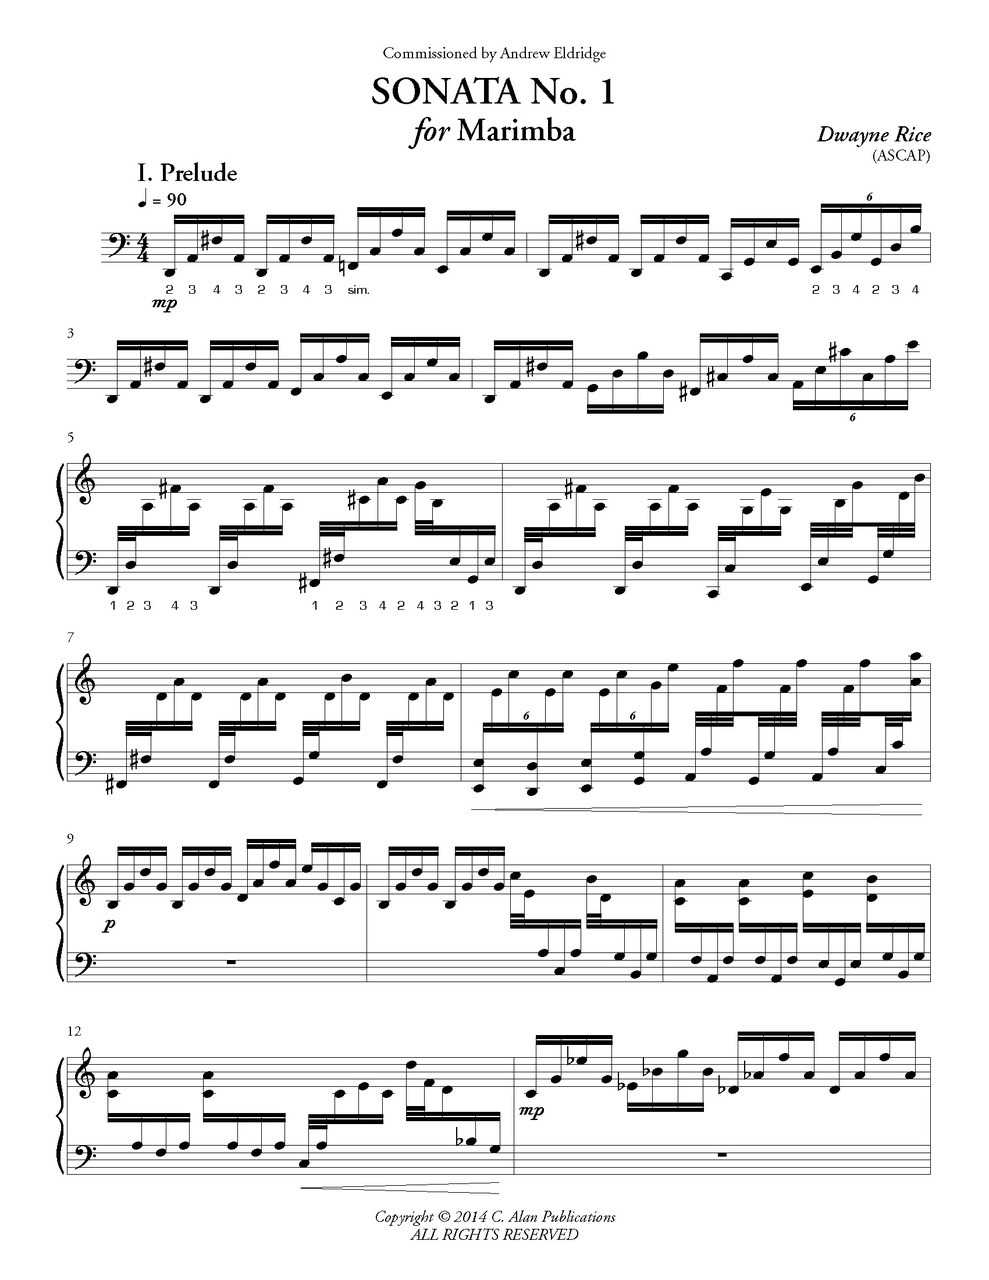 Sonata no. 1 for Marimba by Dwayne Rice